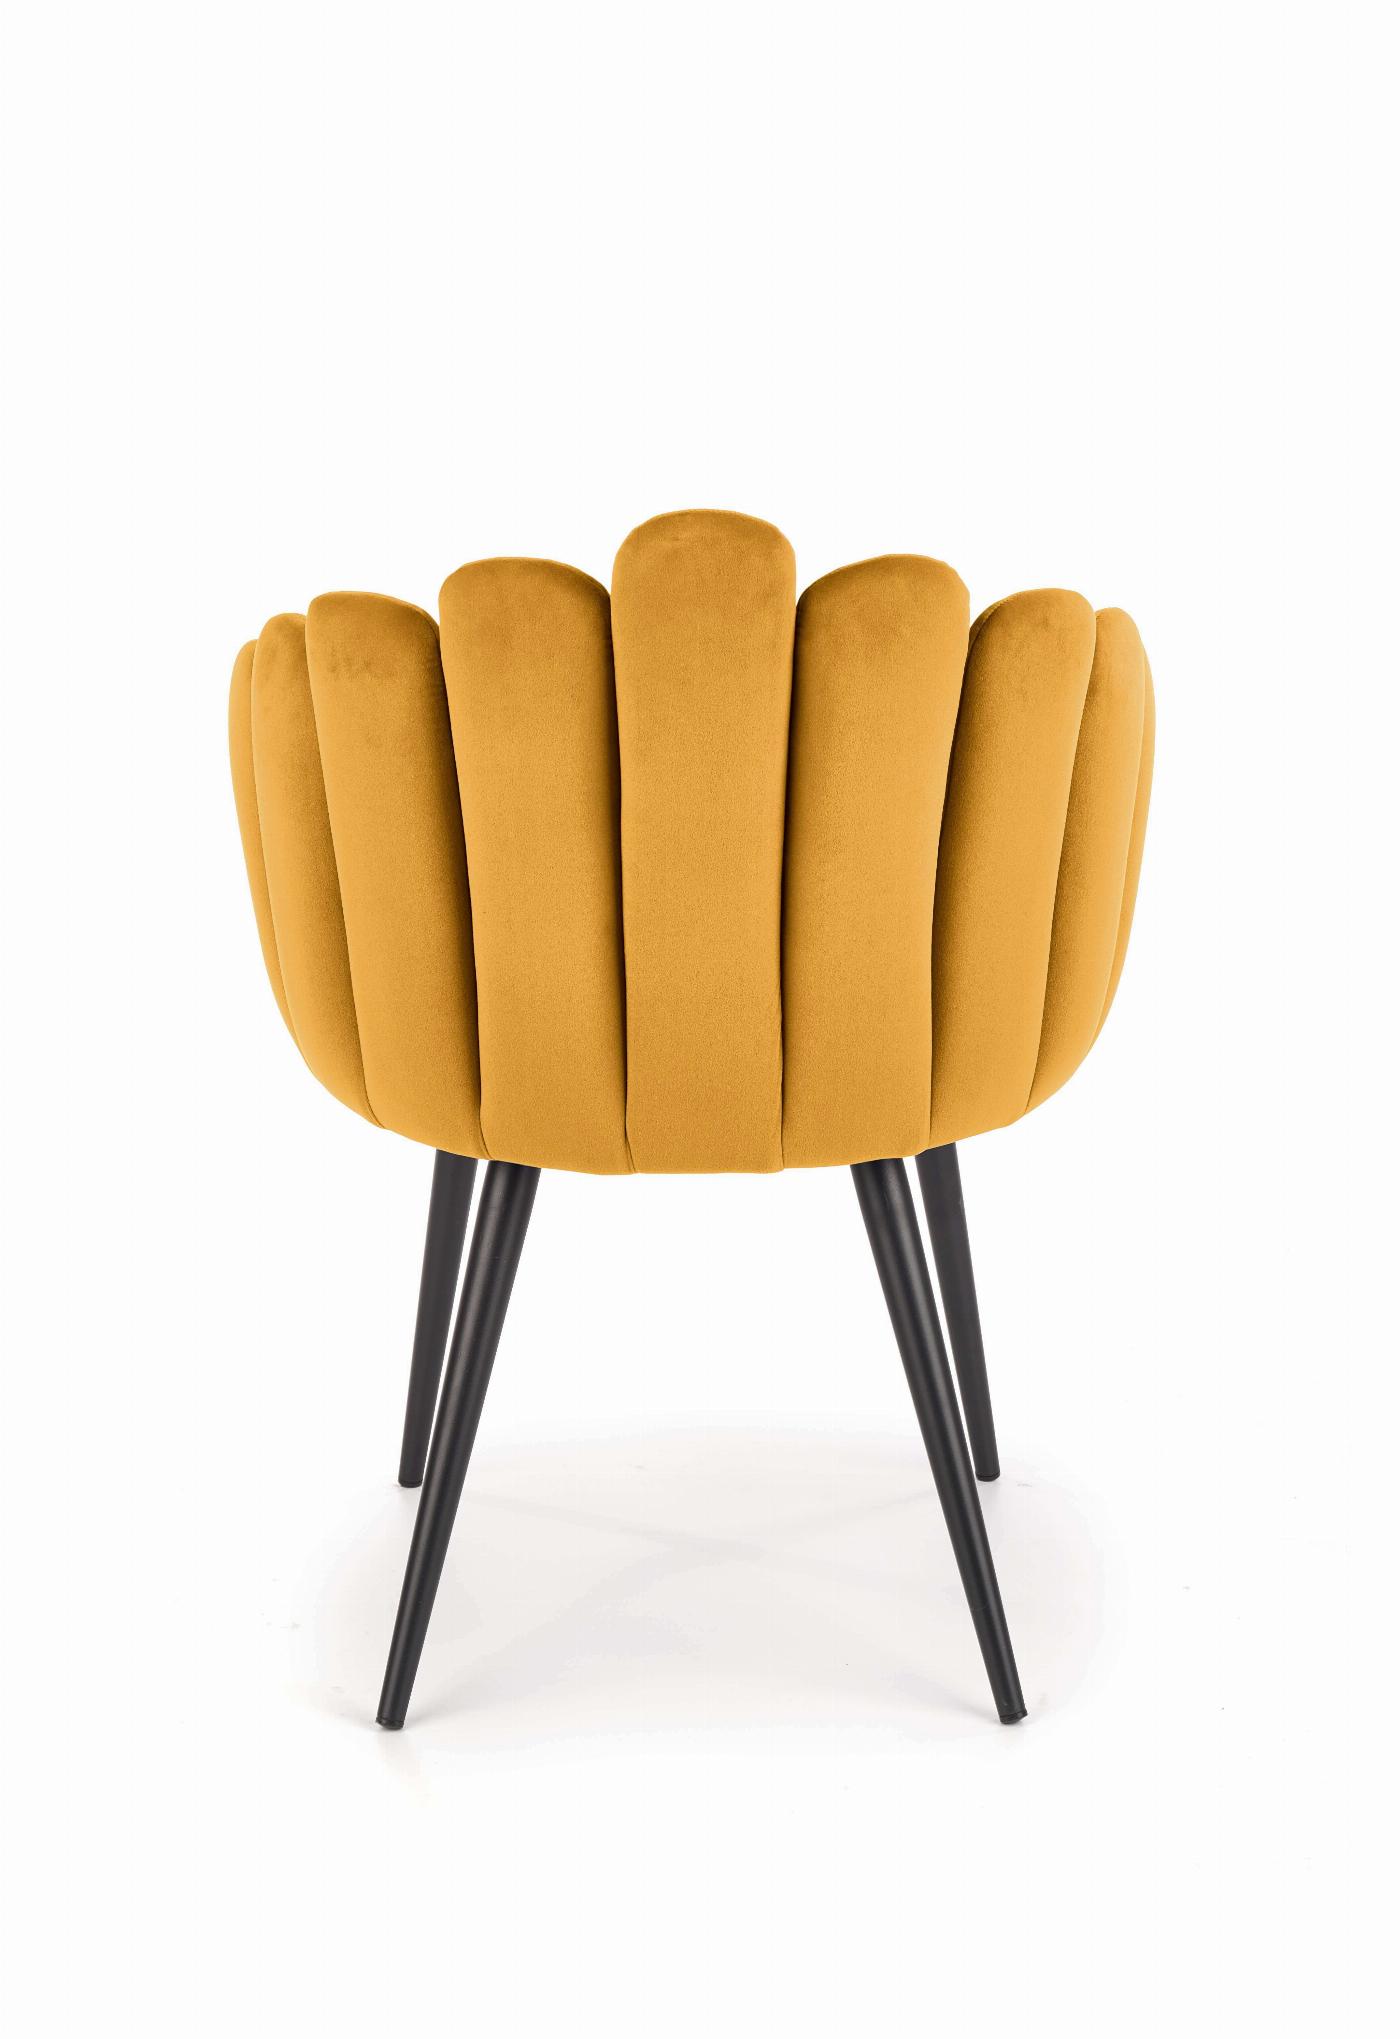 K410 krzesło musztardowy velvet